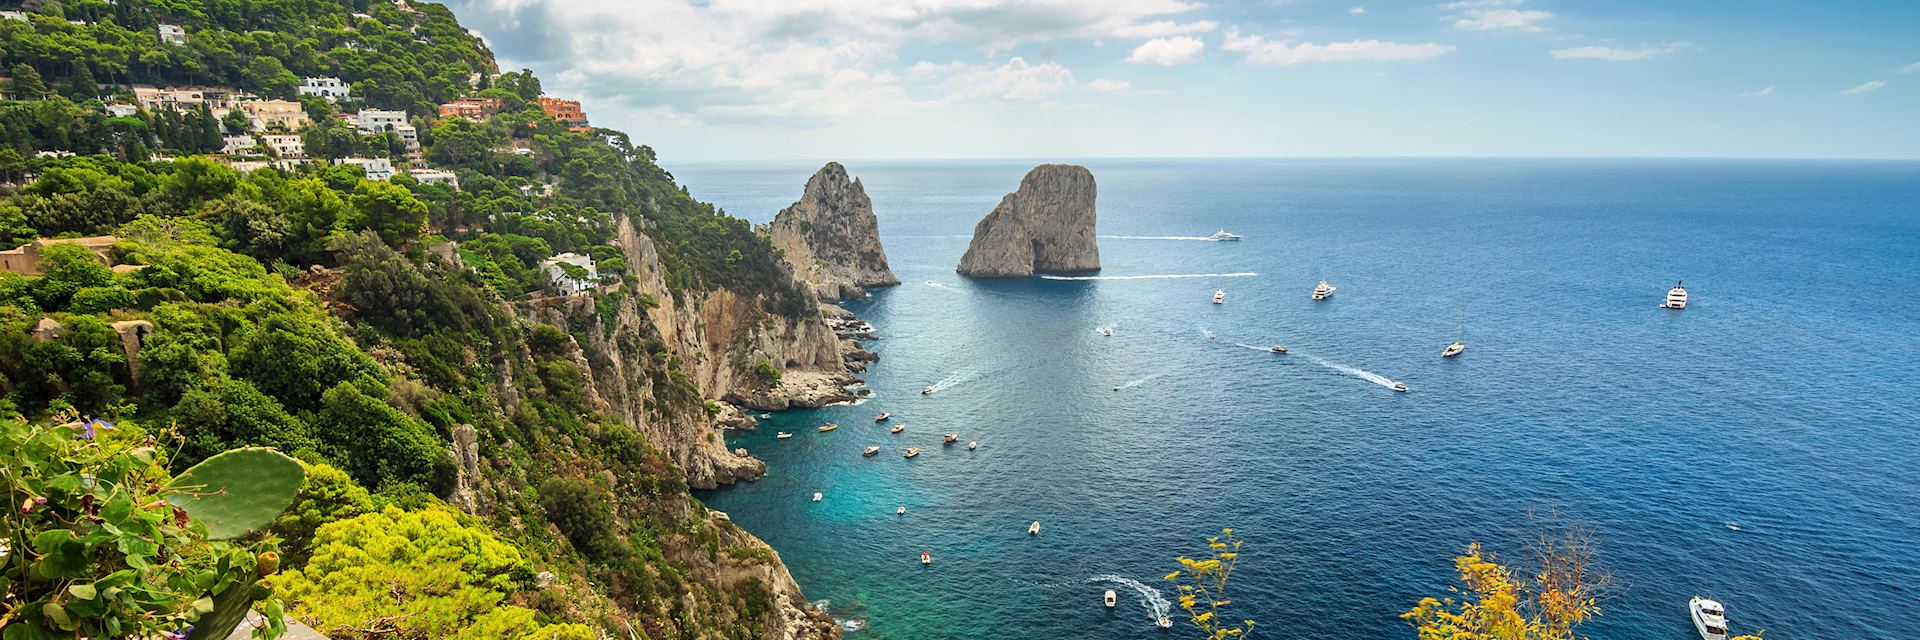 Coastal scenery, Capri Island